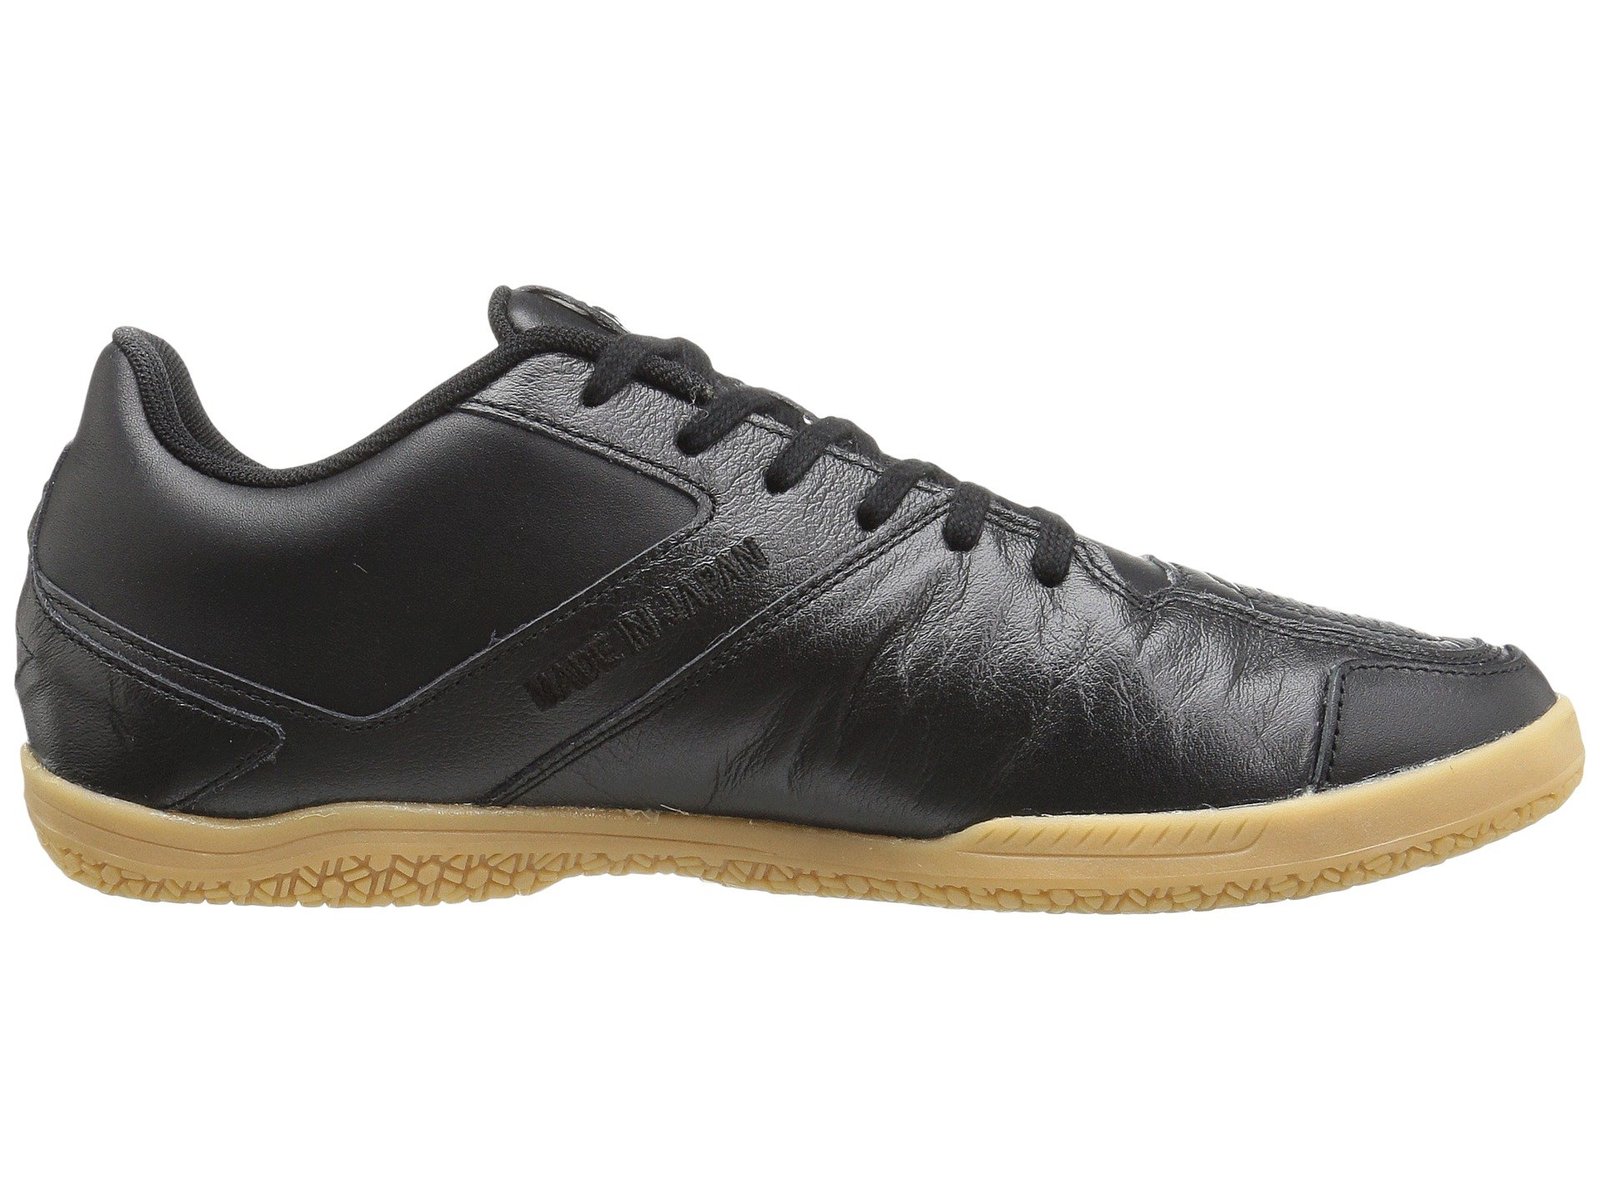 kangaroo leather indoor soccer shoes